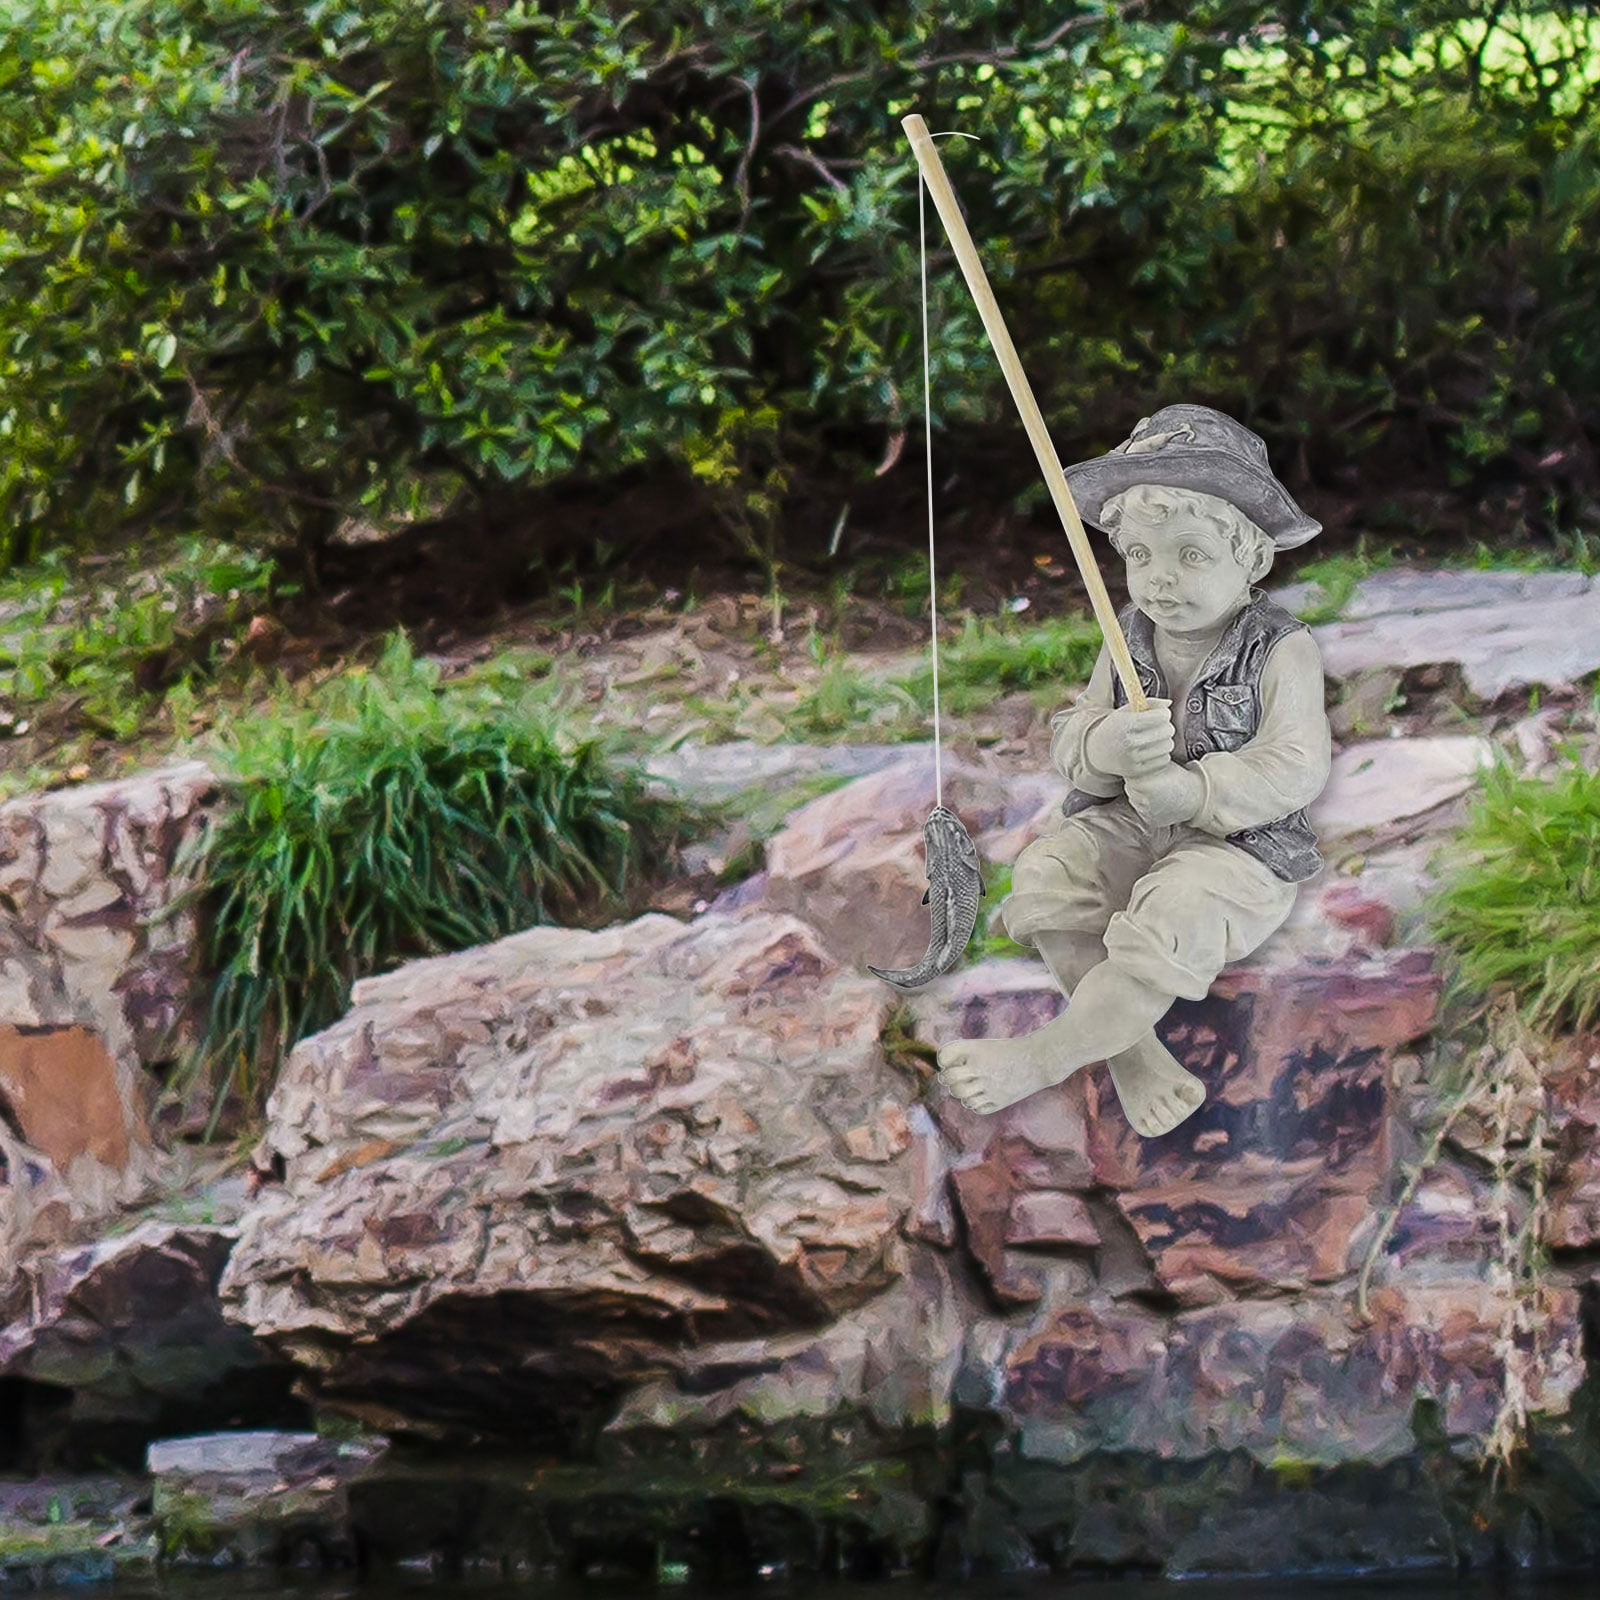 Garden Statue Resin Fisherman Gone Fishing Boy Garden Sculpture Ornaments